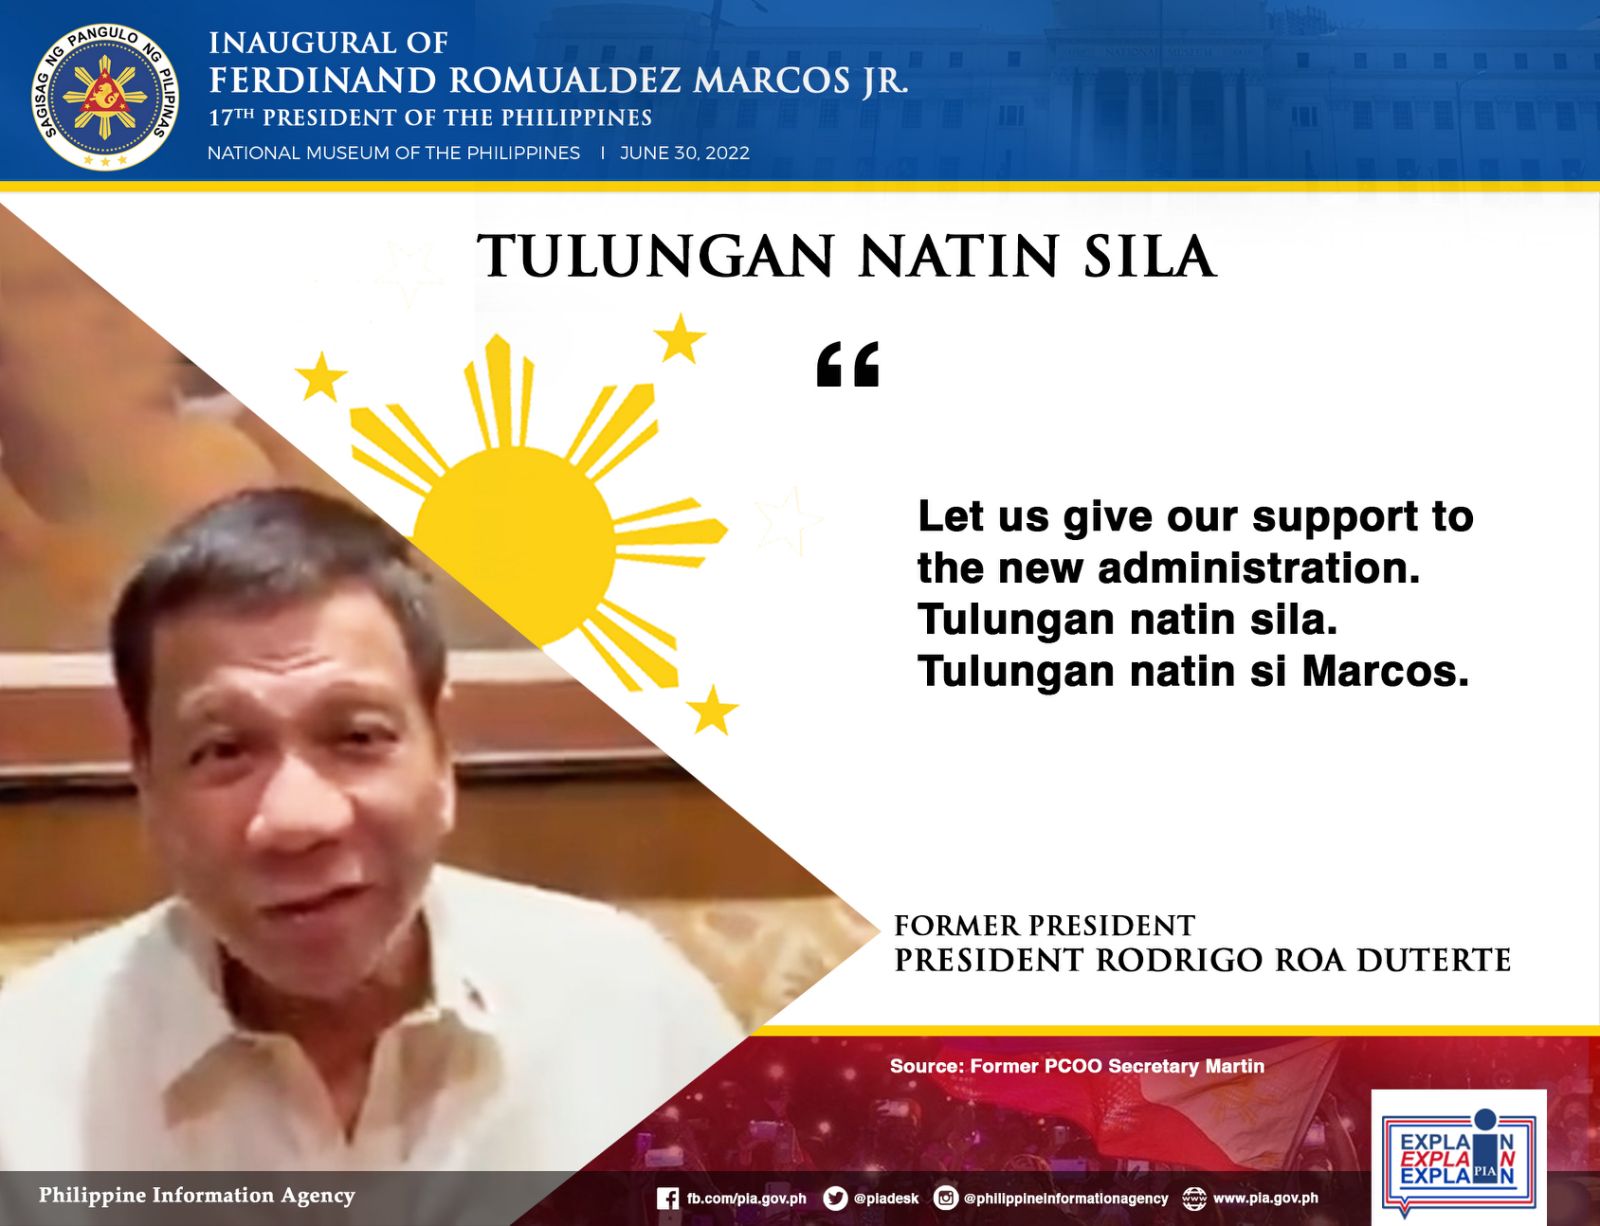 Former President Rodrigo Duterte urges Filipinos to support the new administration